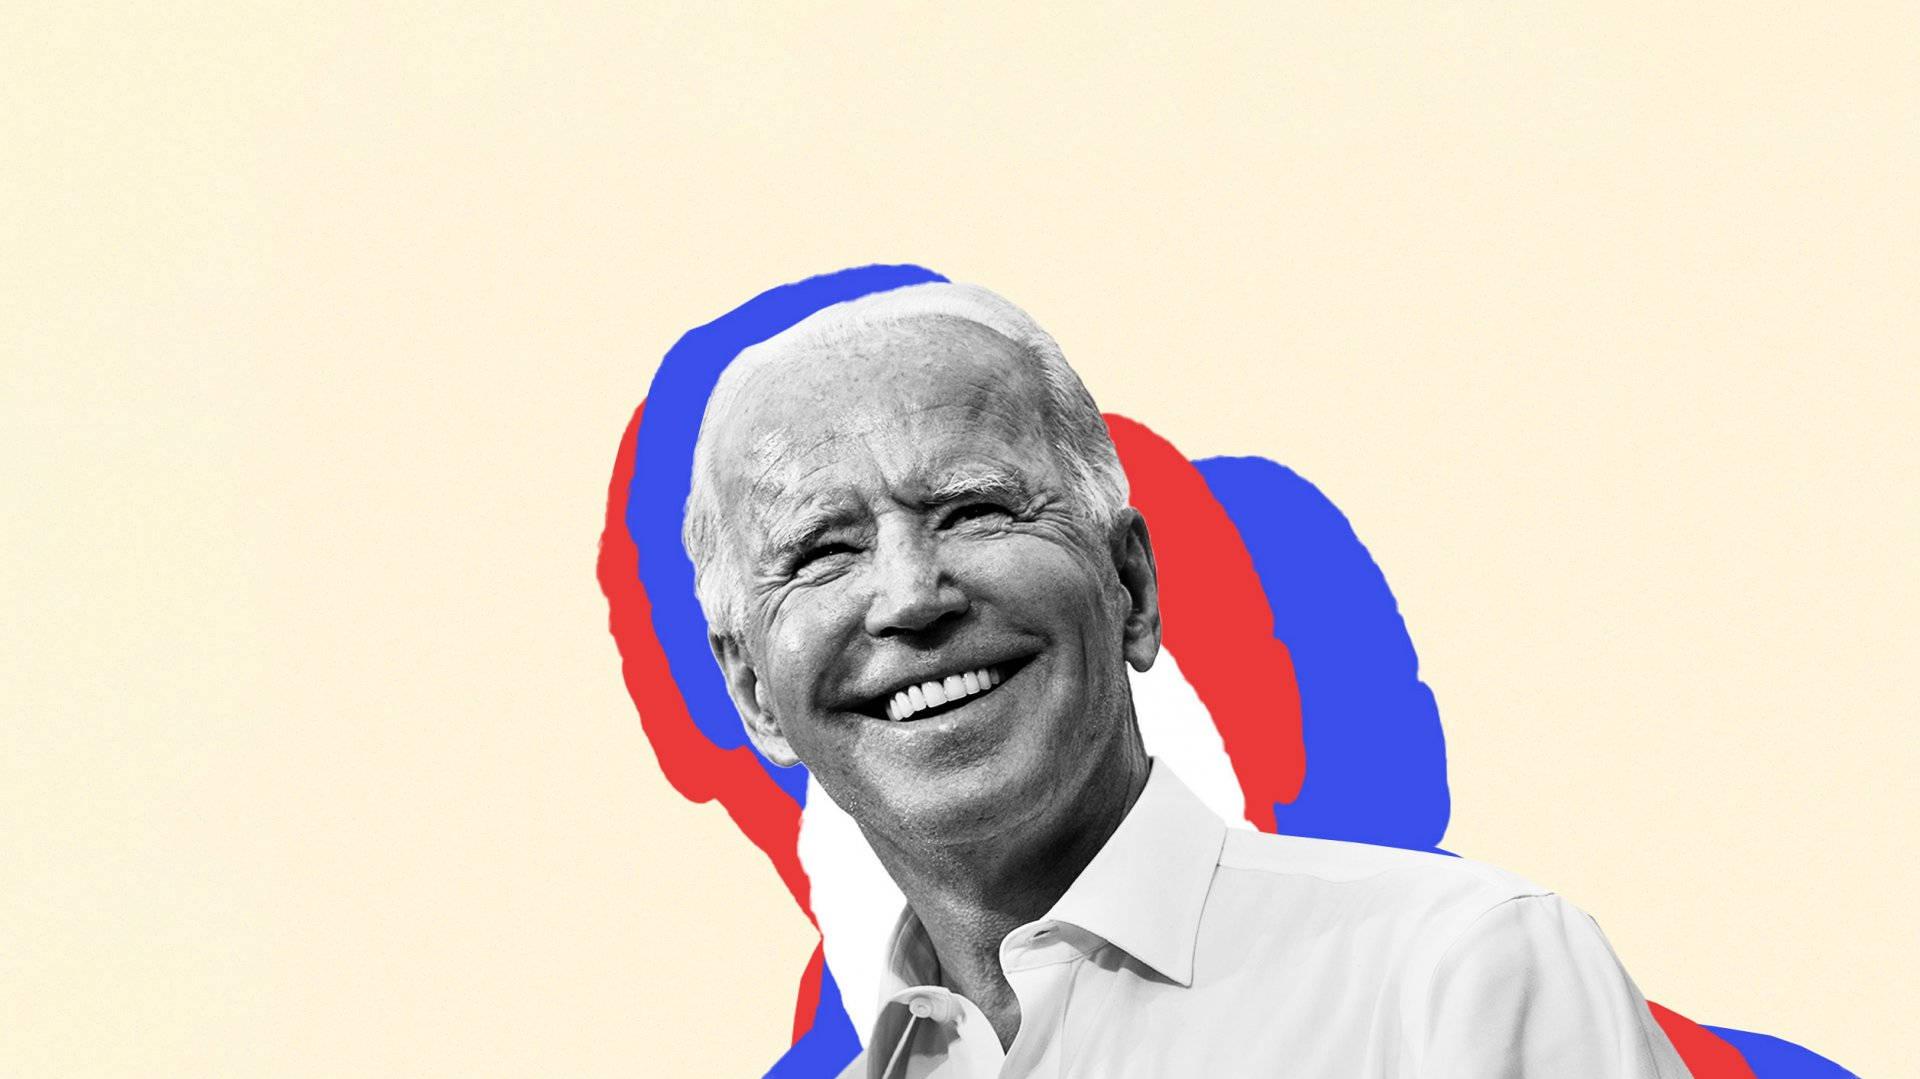 Download Joe Biden Putting a new spin on leadership Wallpaper